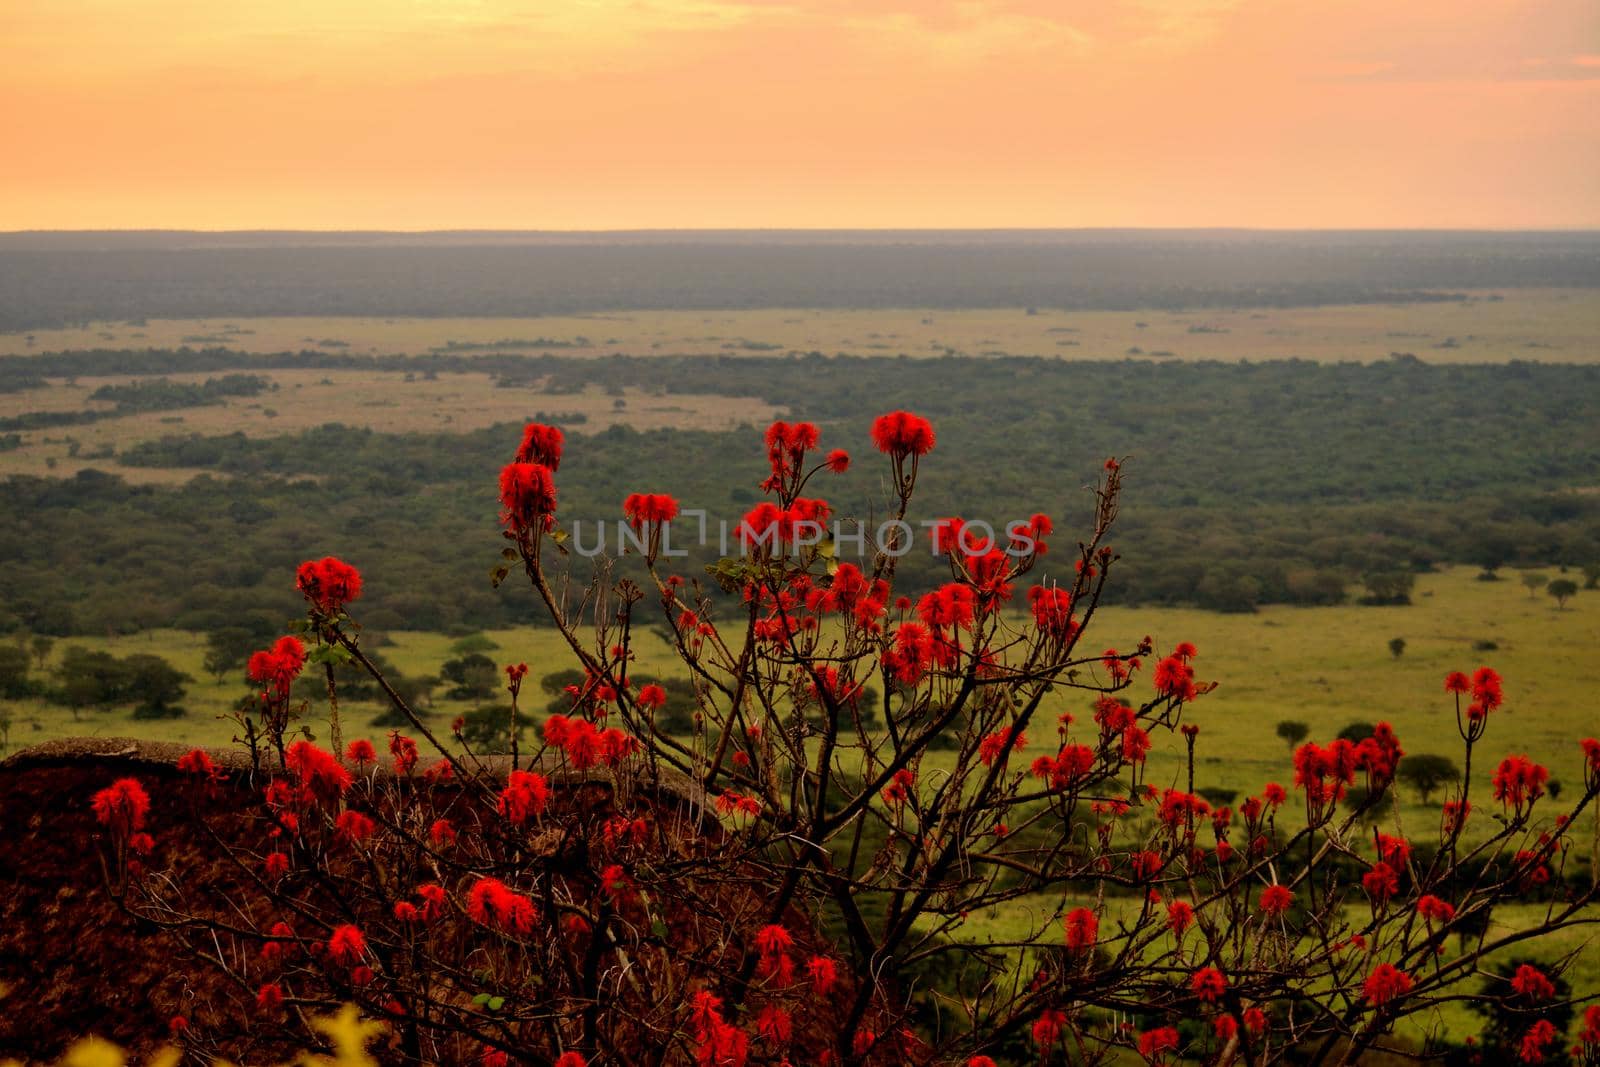 View of Queen Elizabeth National Park and the wonderful savanna, Uganda